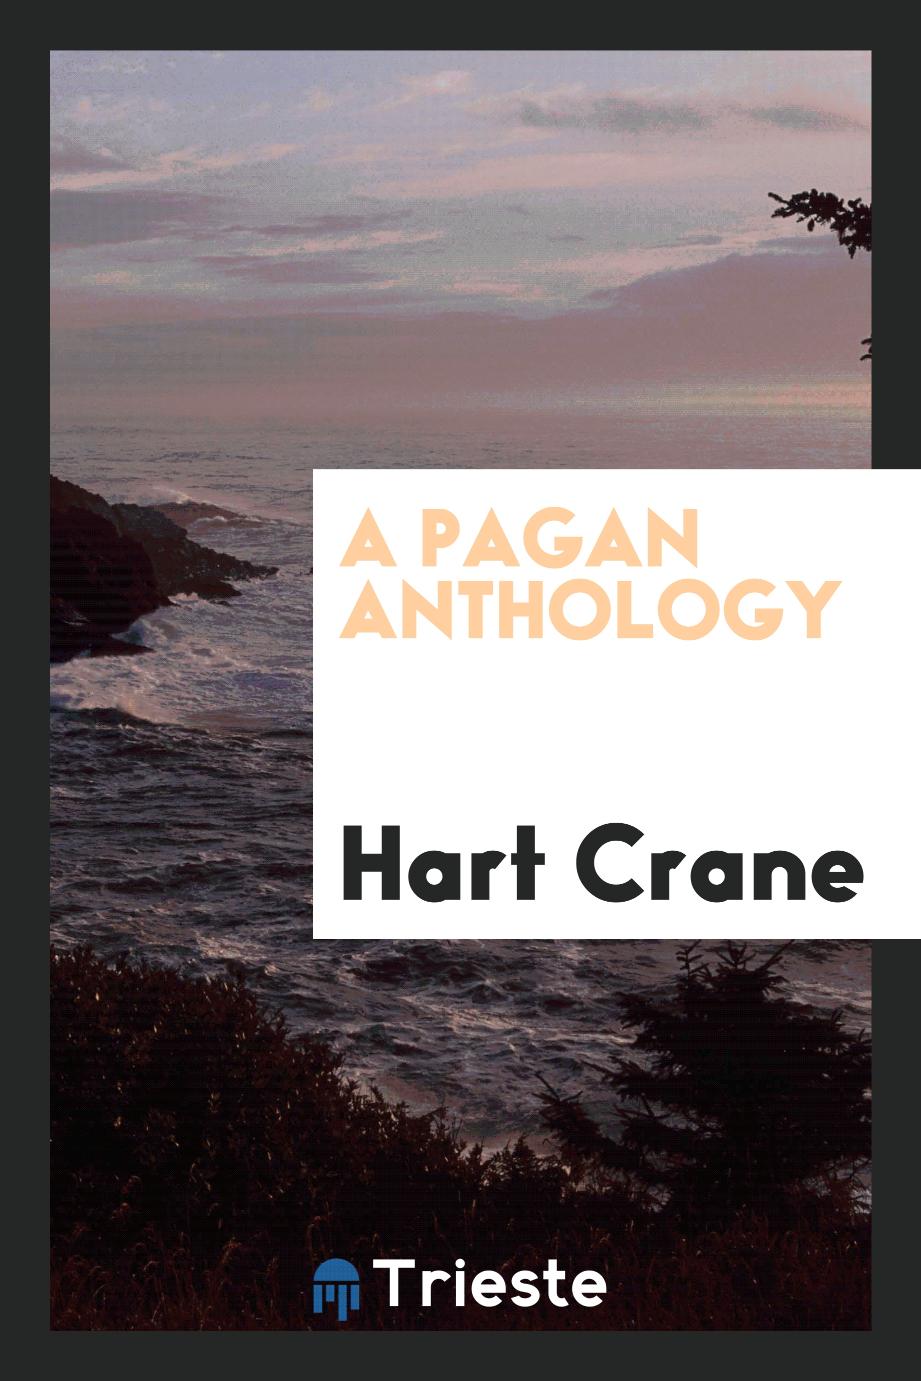 A Pagan anthology